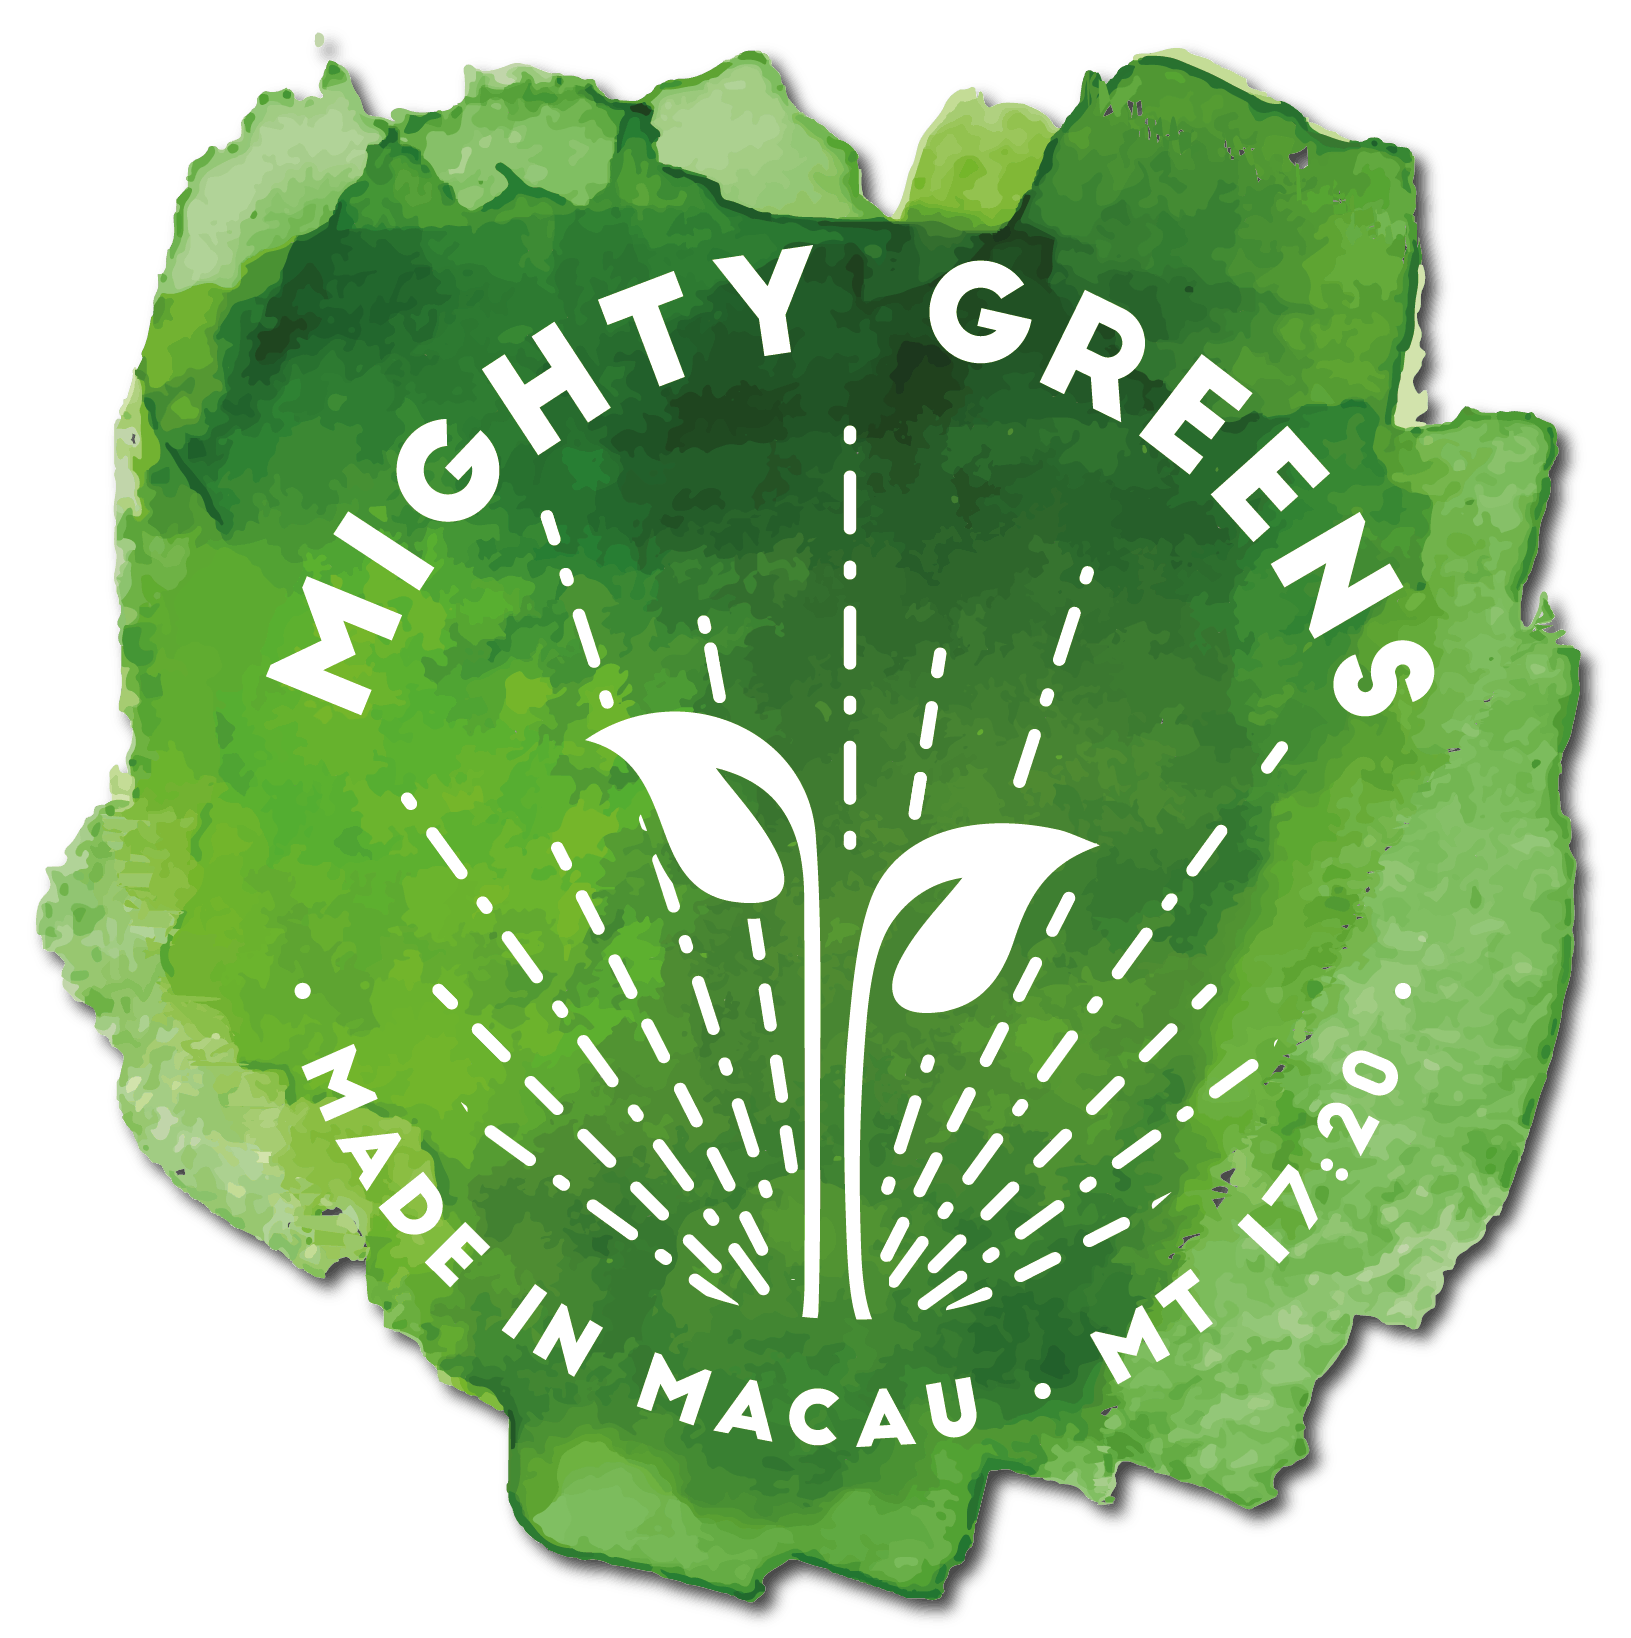 Mighty Greens logo